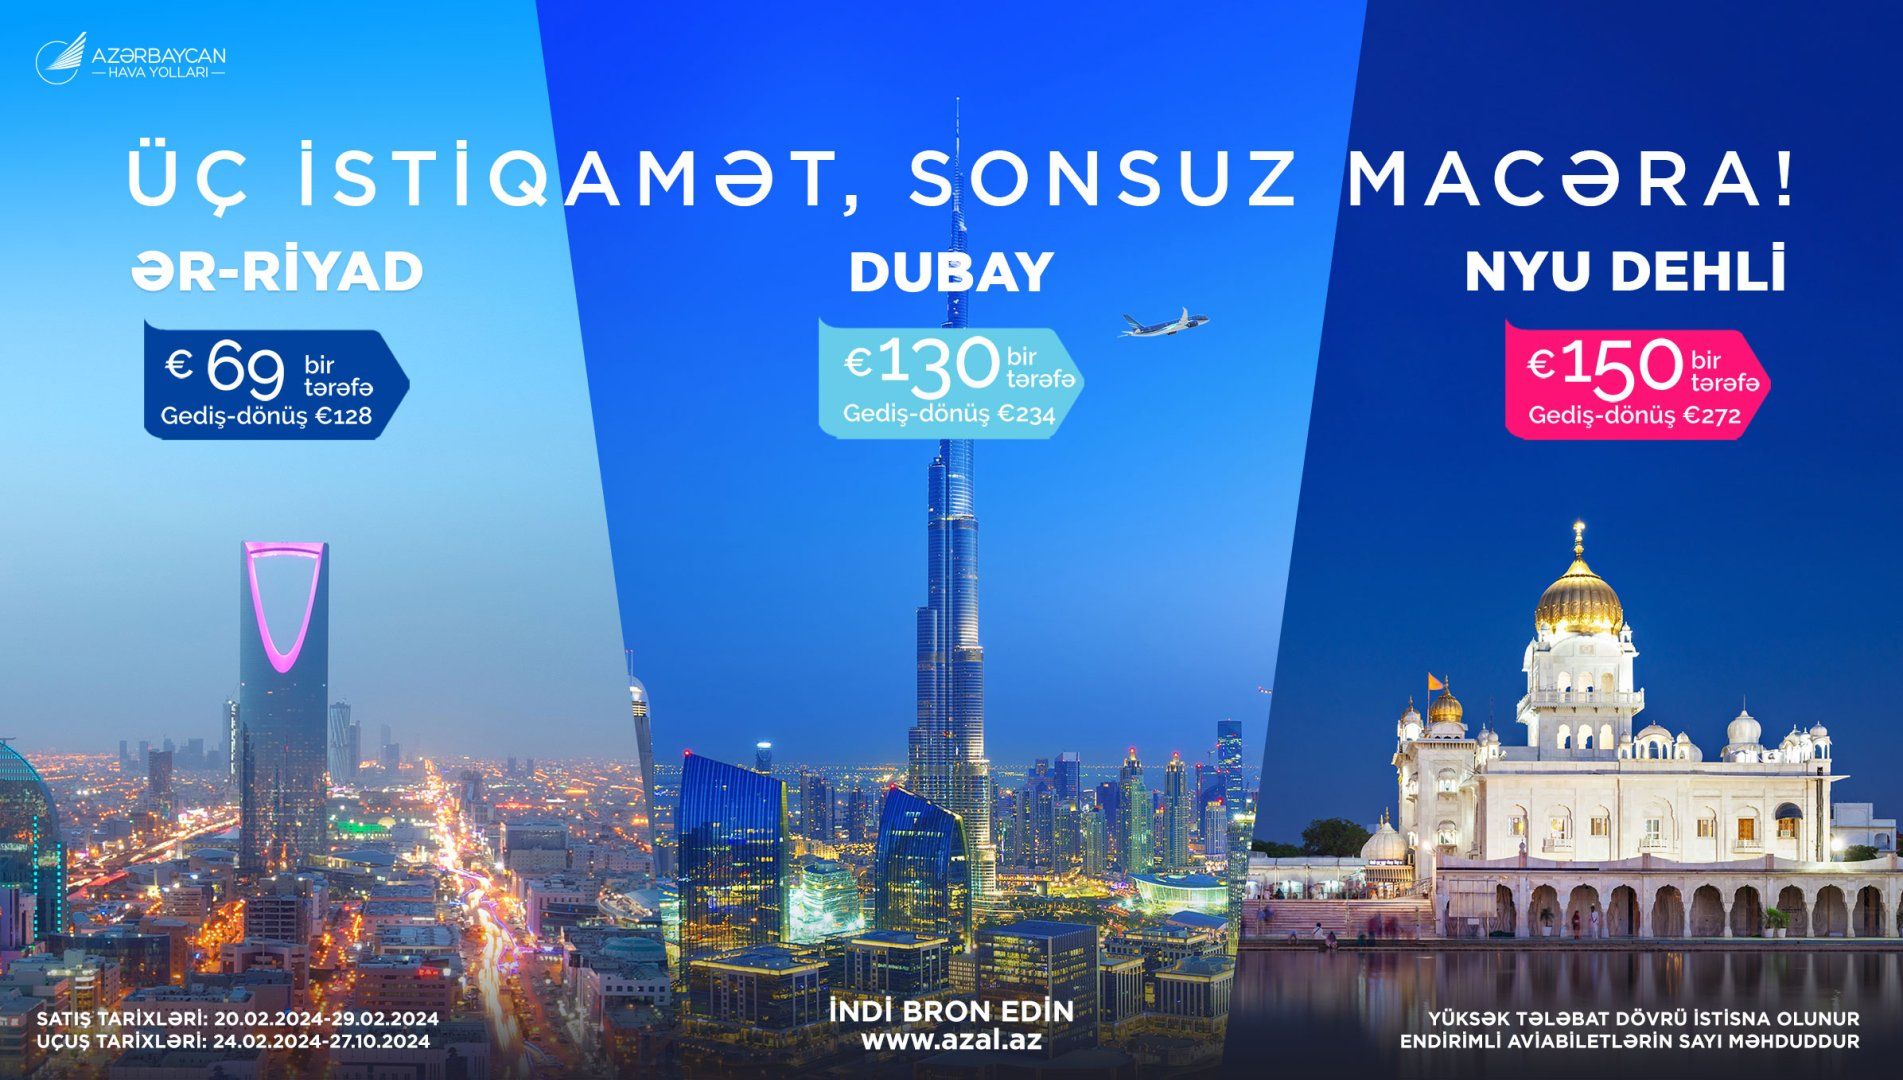 Special offer from AZAL: discounts on flights to Dubai, Riyadh and New Delhi